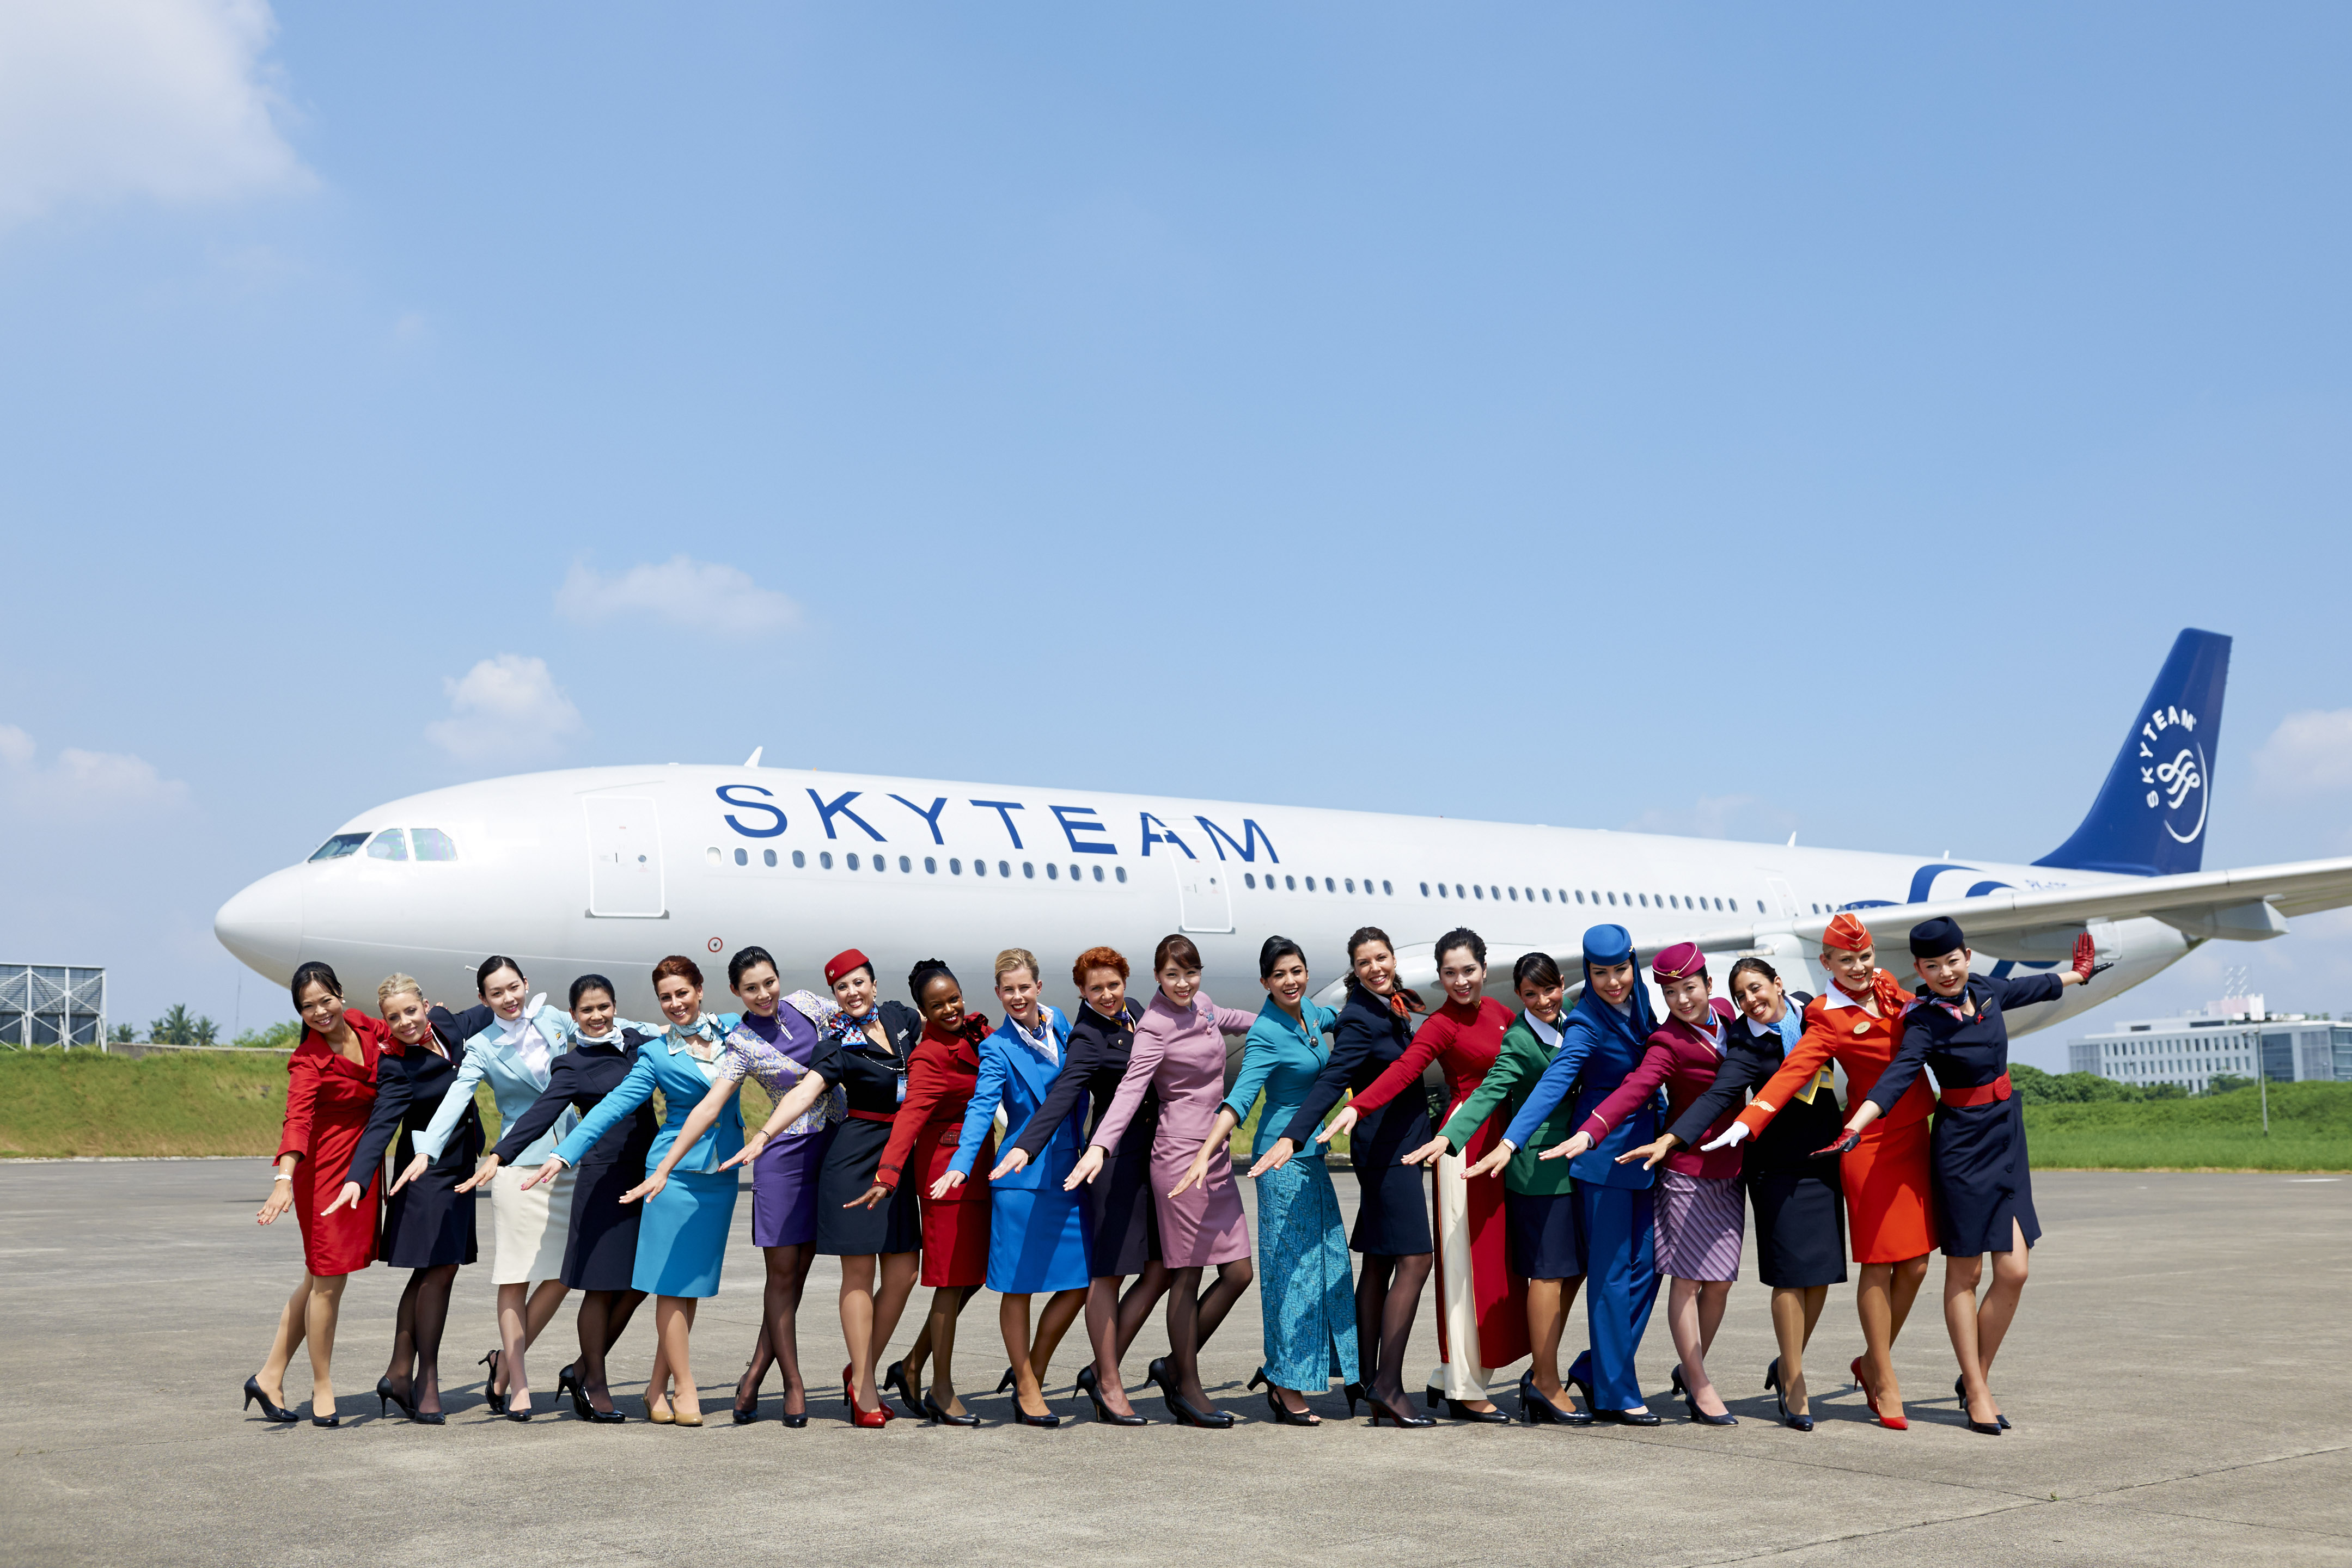 Skyteam_cabin crew_hostes_group_2014